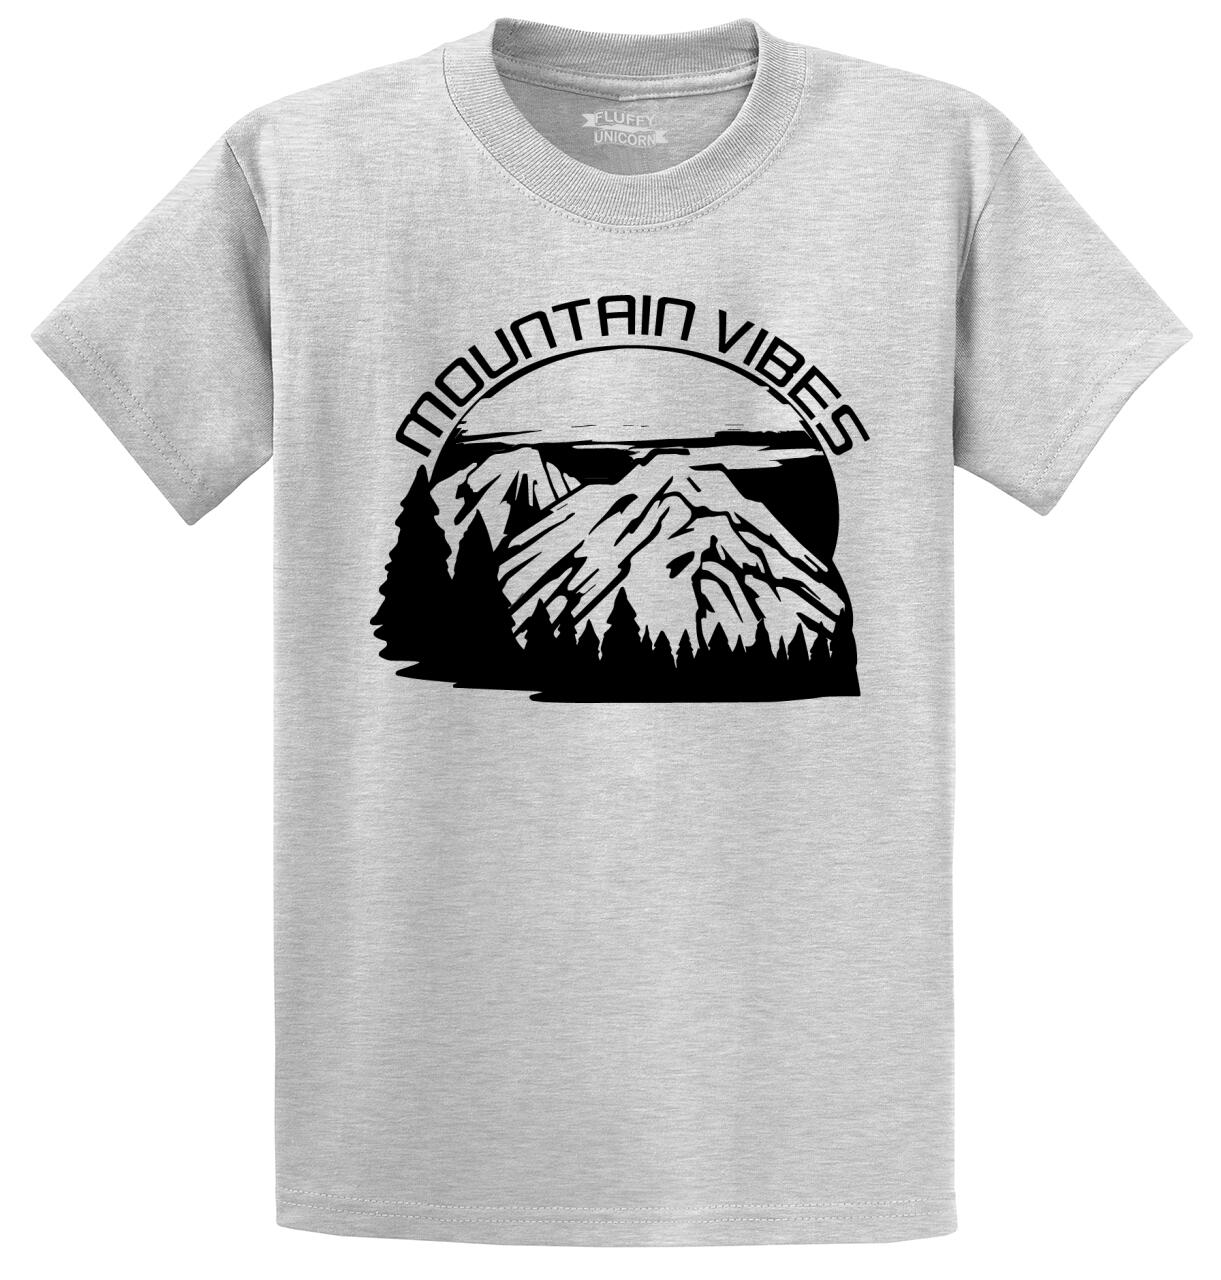 Mountain vibes unisex t shirt